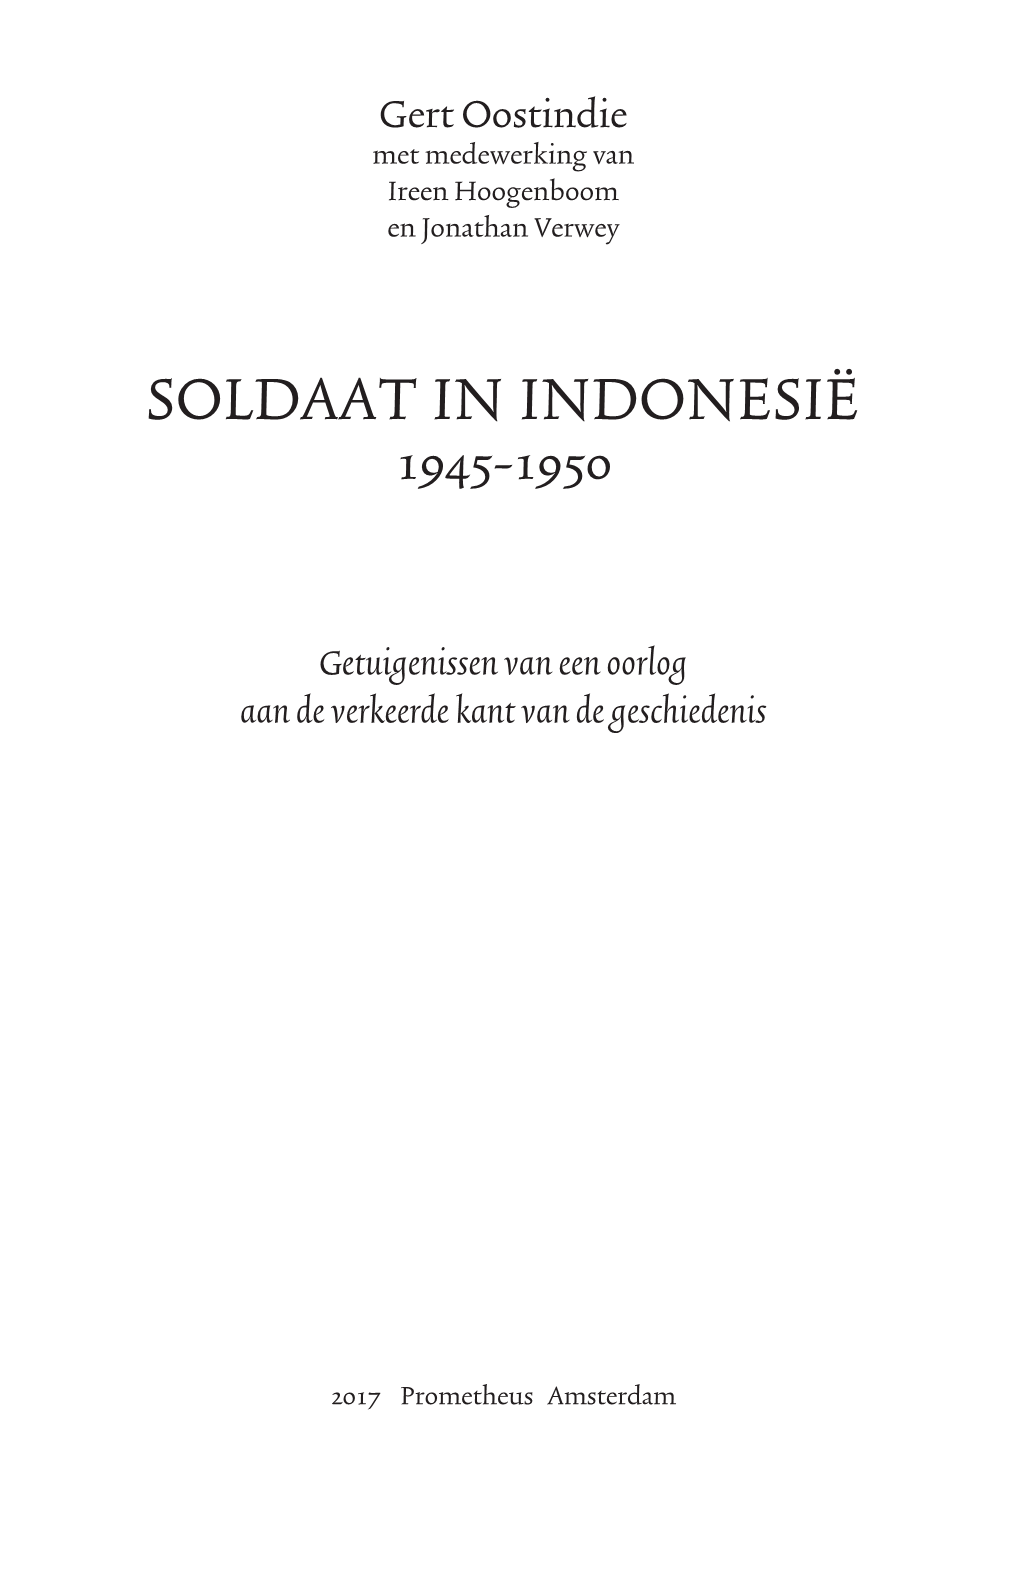 Soldaat in Indonesië 1945-1950